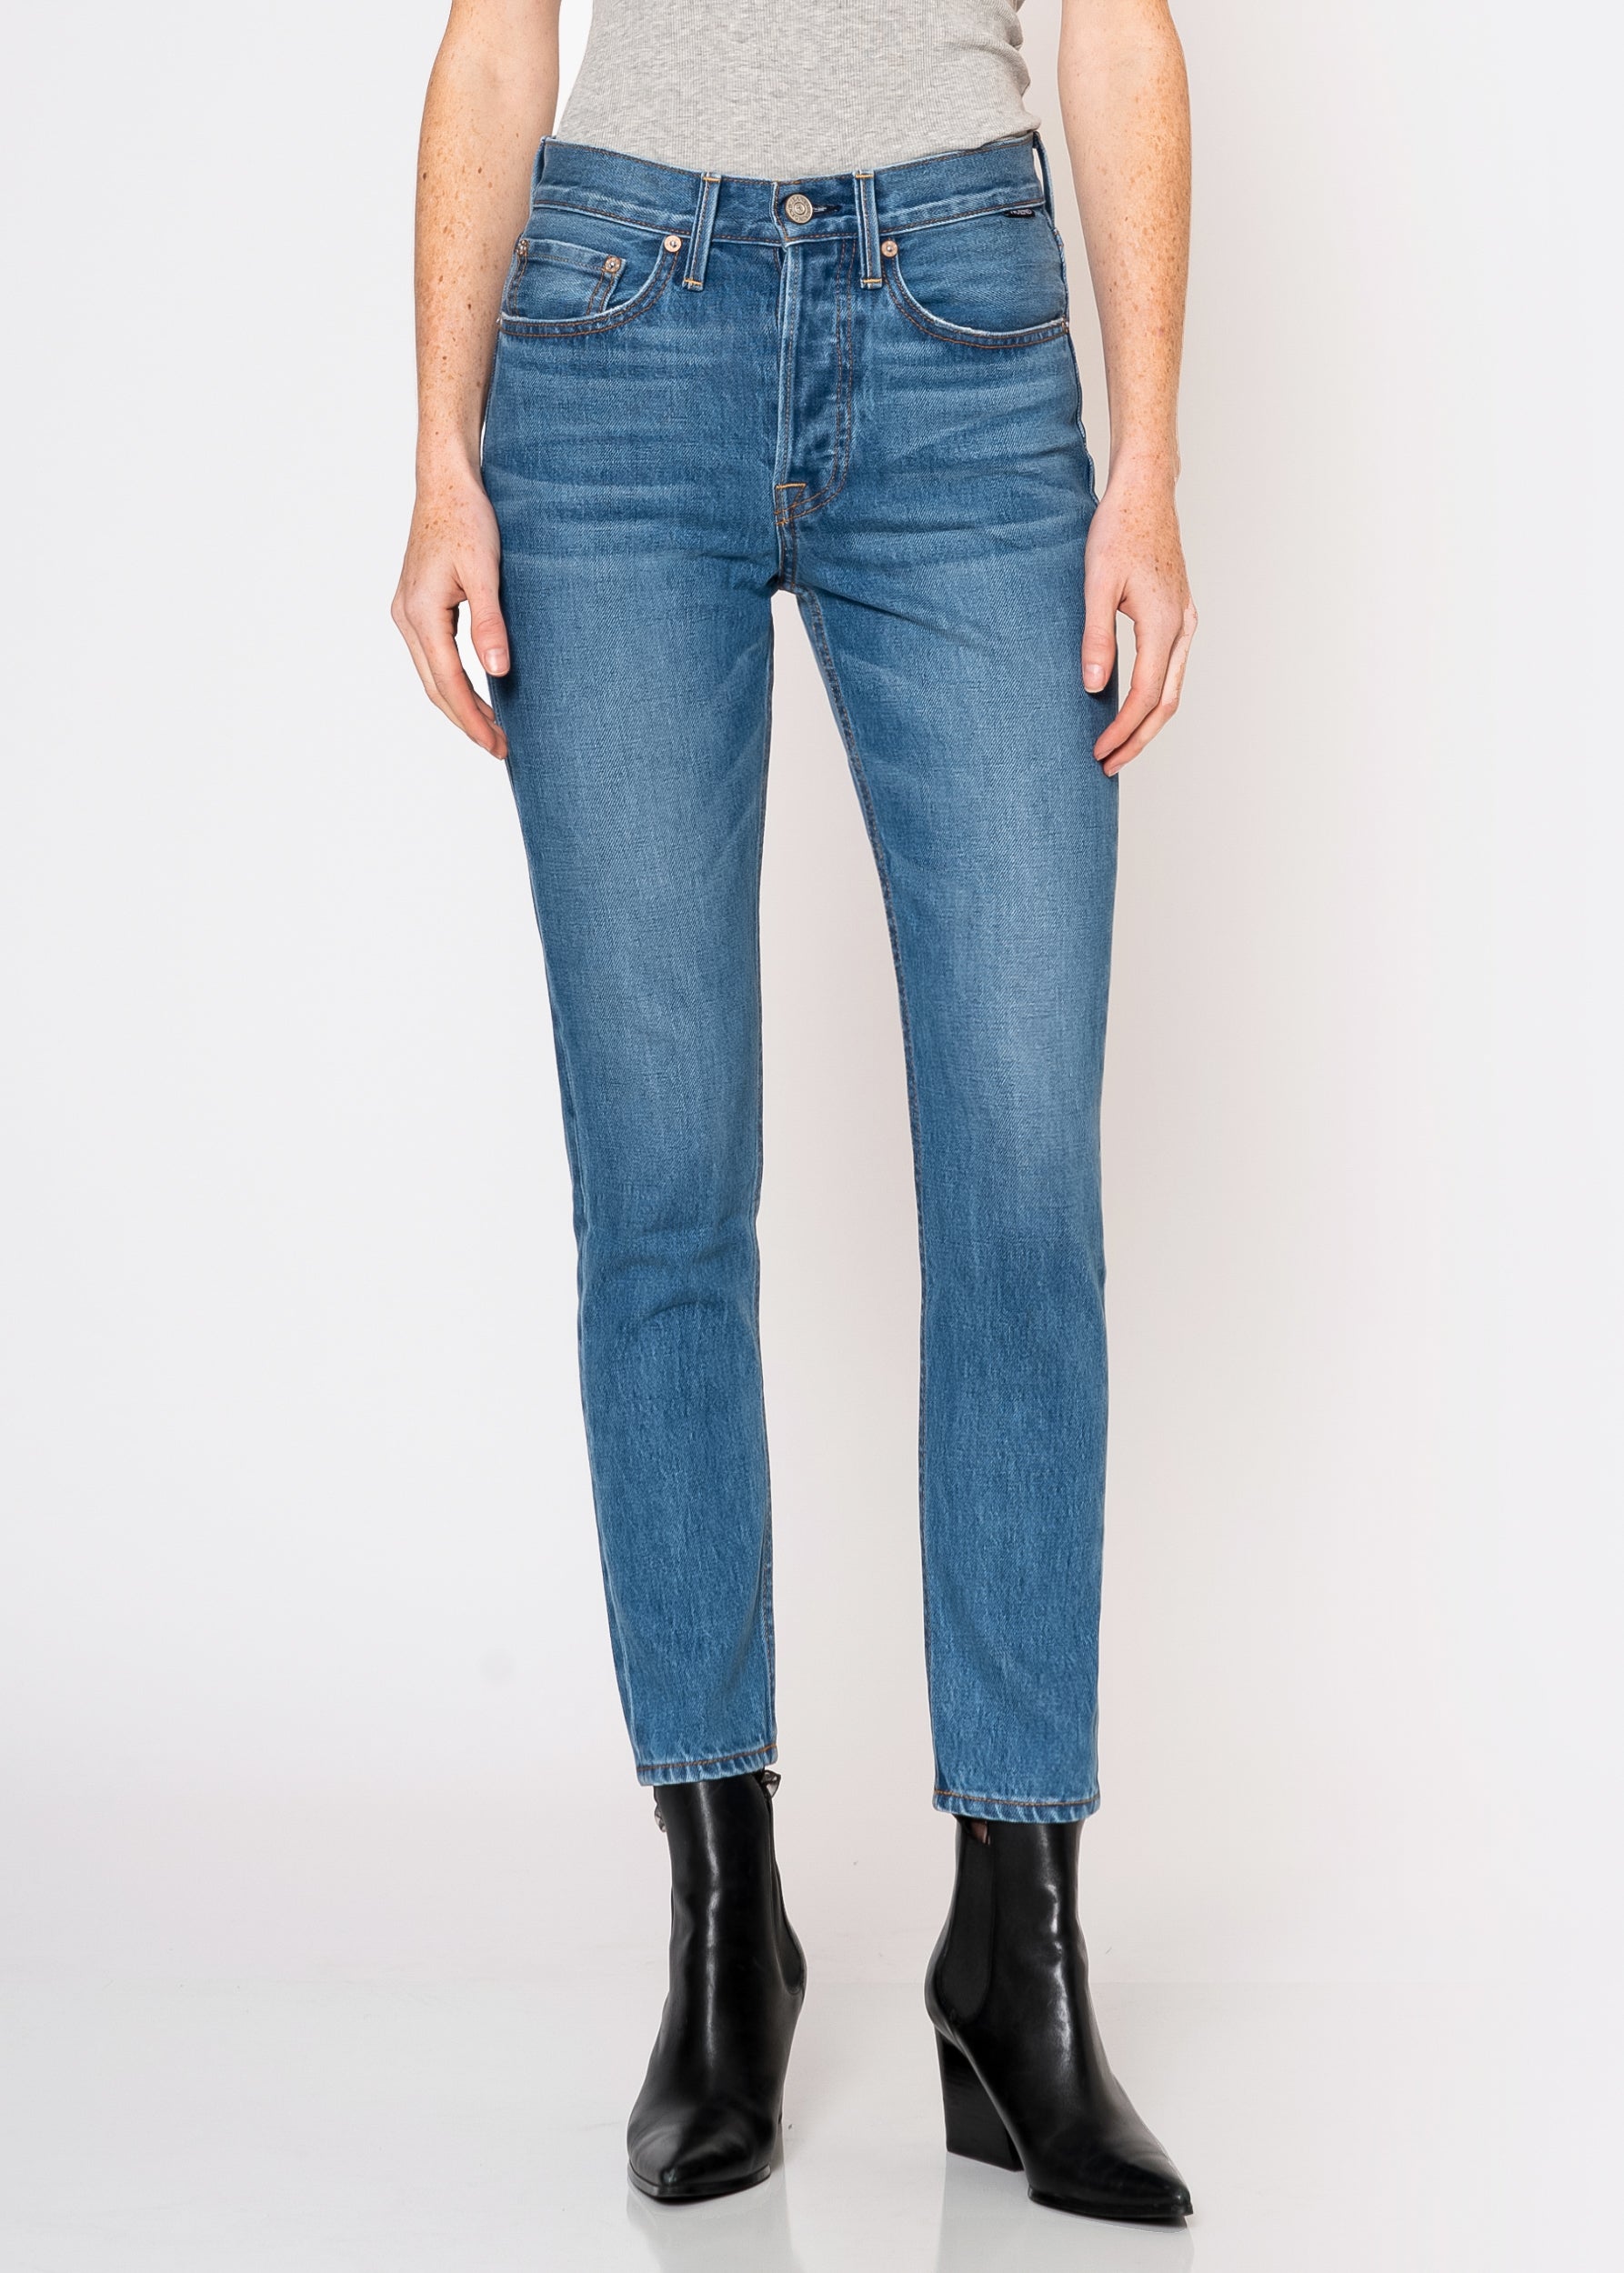 Augusta High Rise Skinny Jeans in Habit - Noend Denim